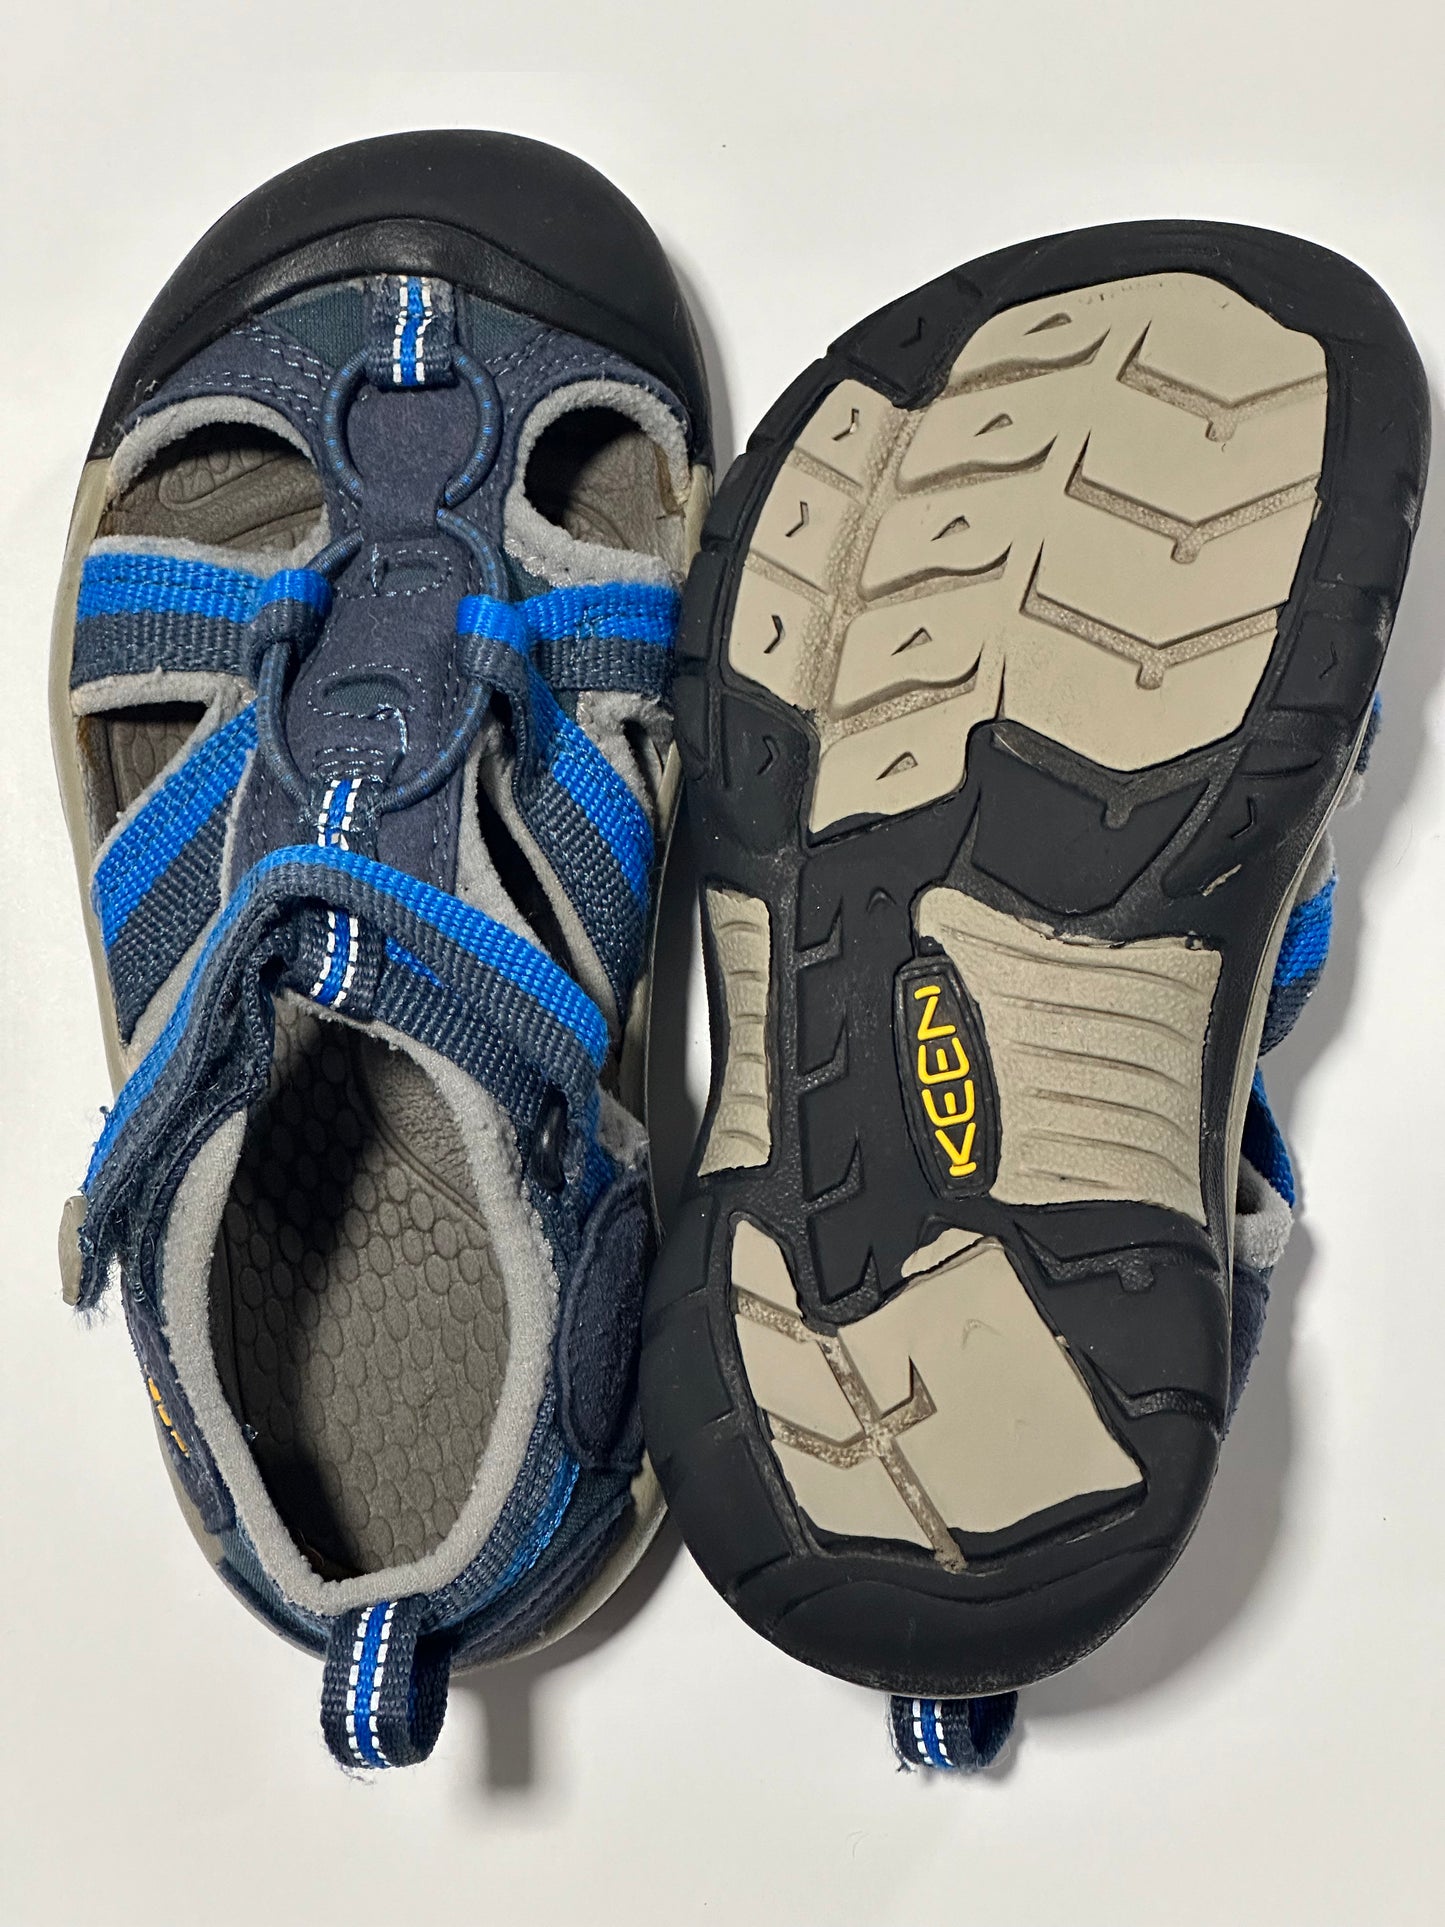 Blue Keen sandals - EUC - size 12